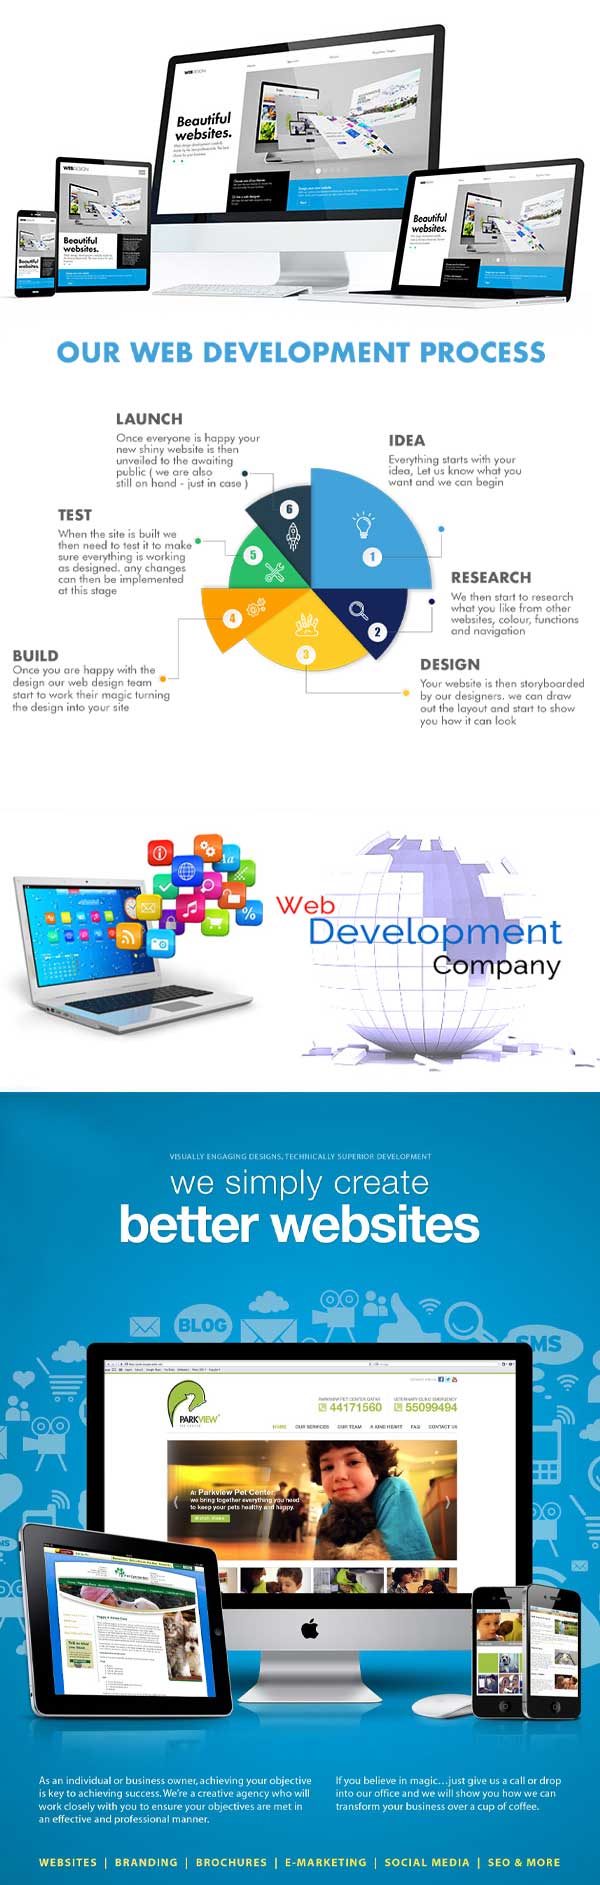 Website Design Service Company in Doha Qatar